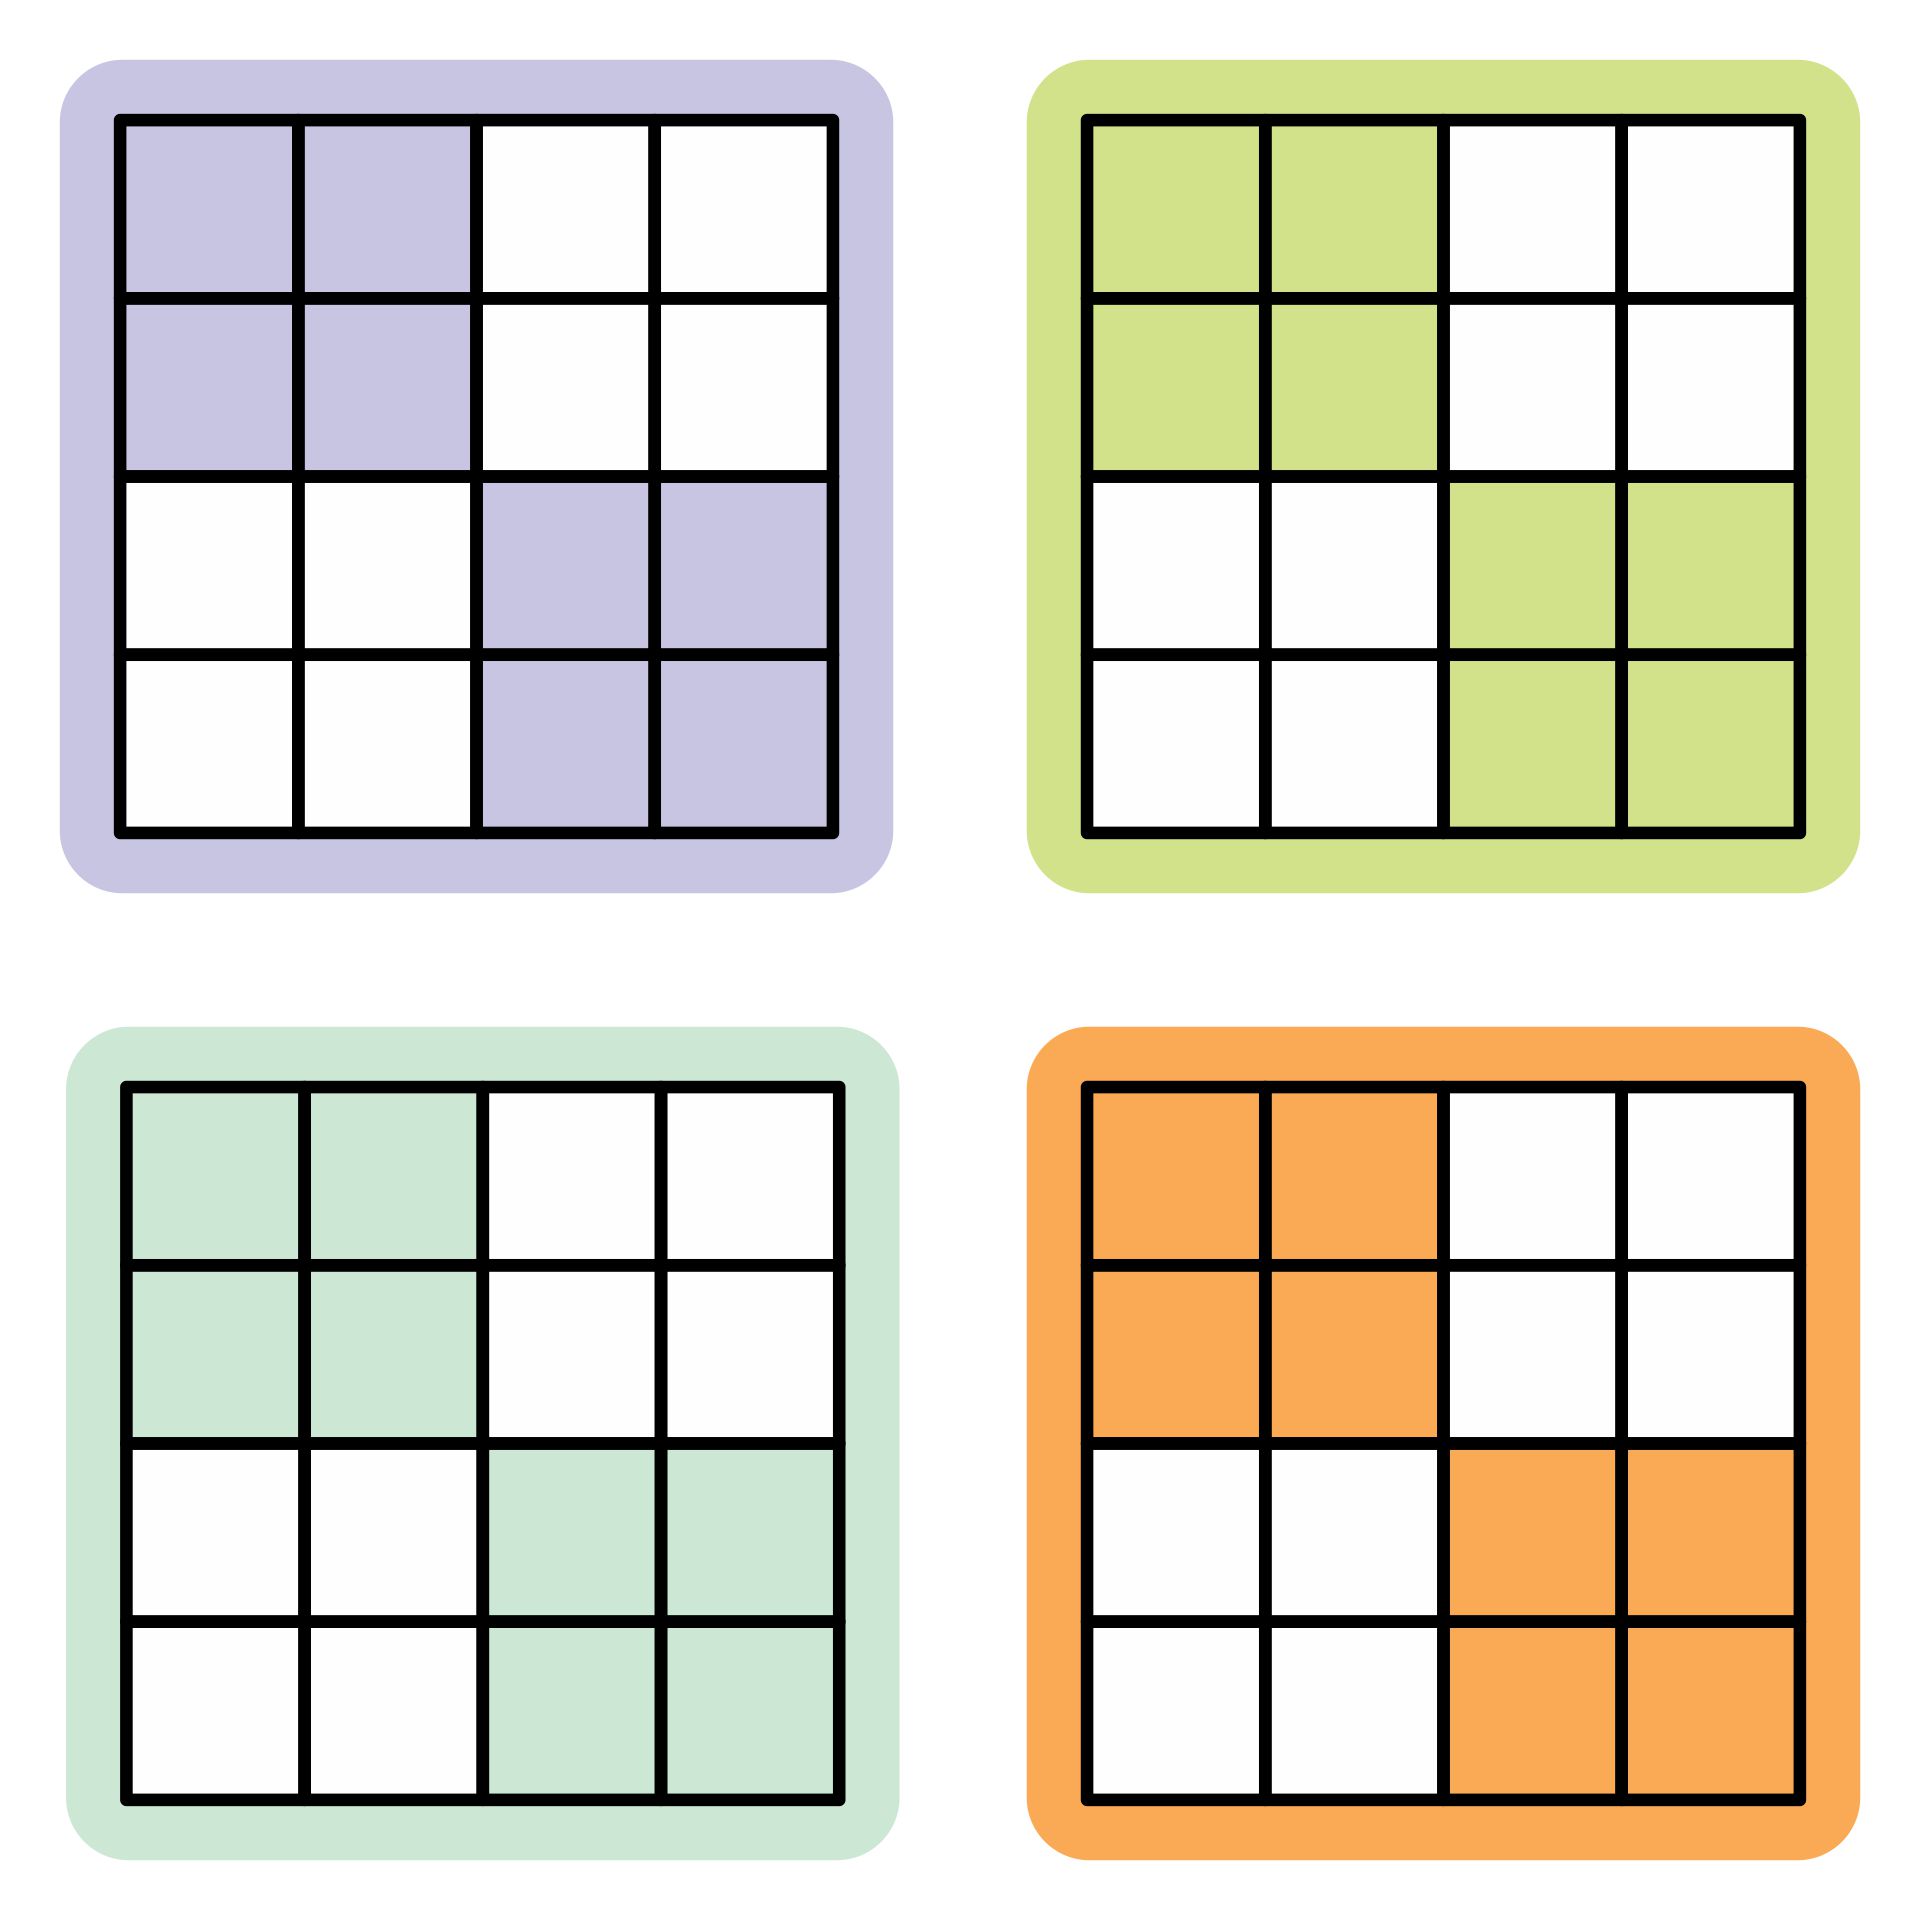 Sudoku Blank Grids Printable Free